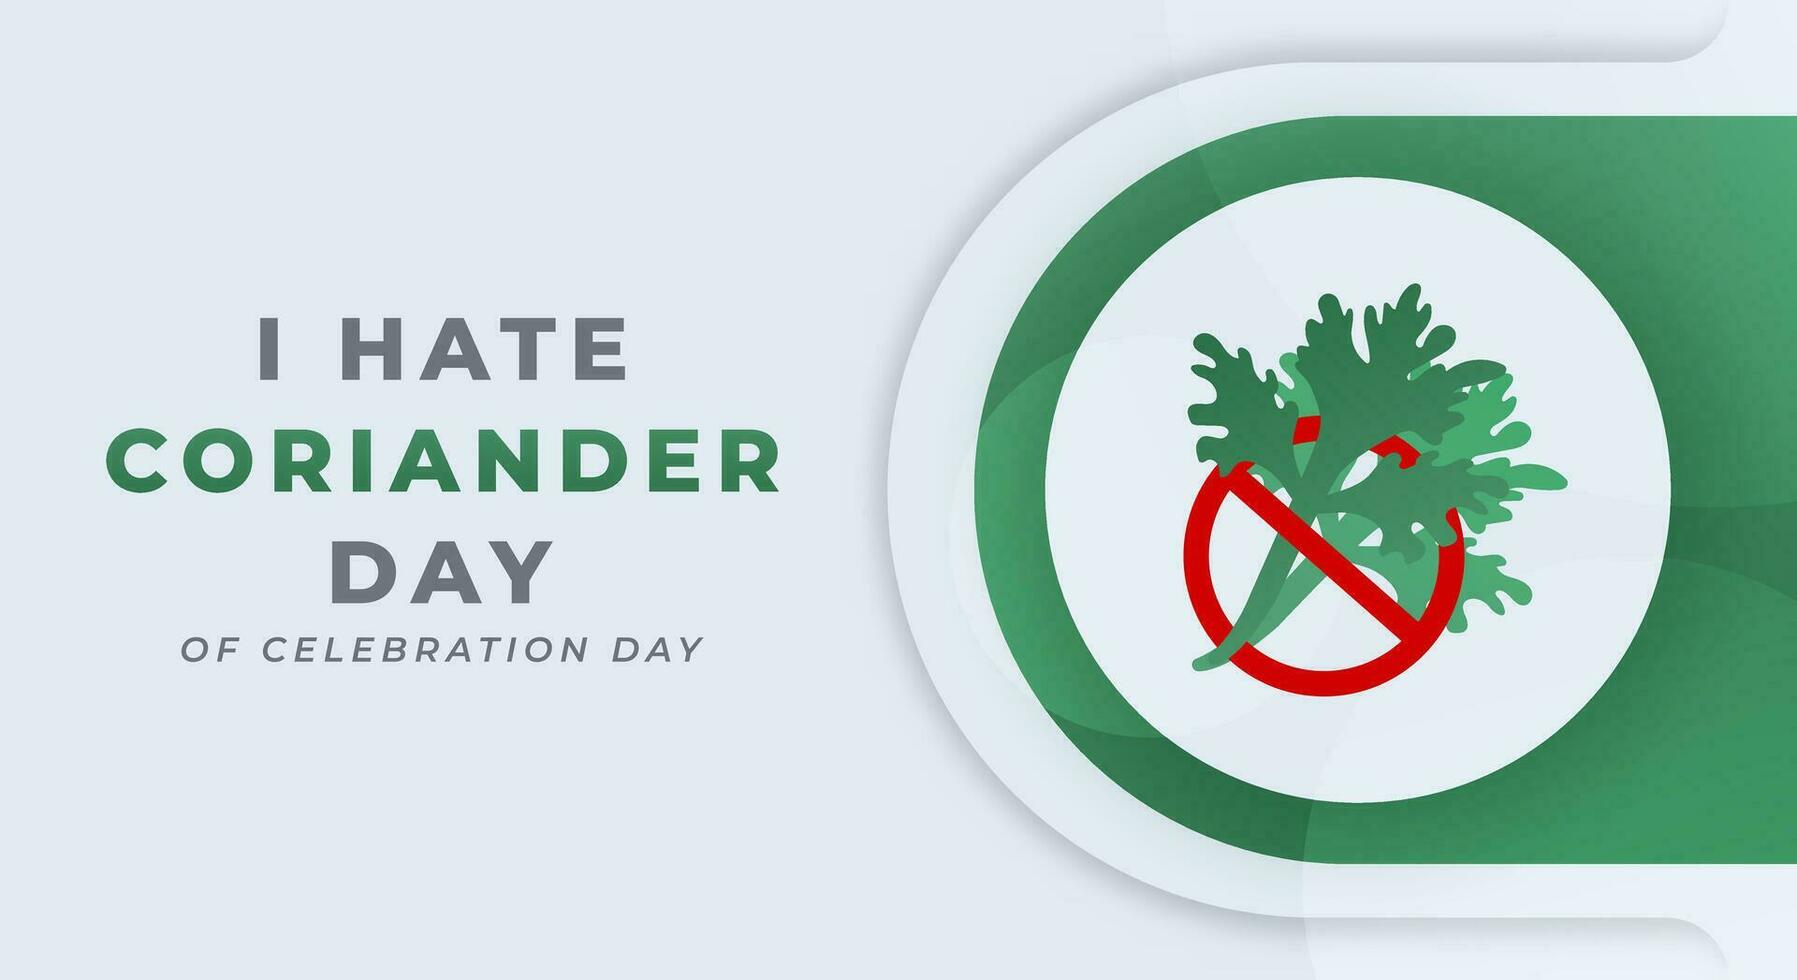 I Hate Coriander Day Celebration Vector Design Illustration for Background, Poster, Banner, Advertising, Greeting Card